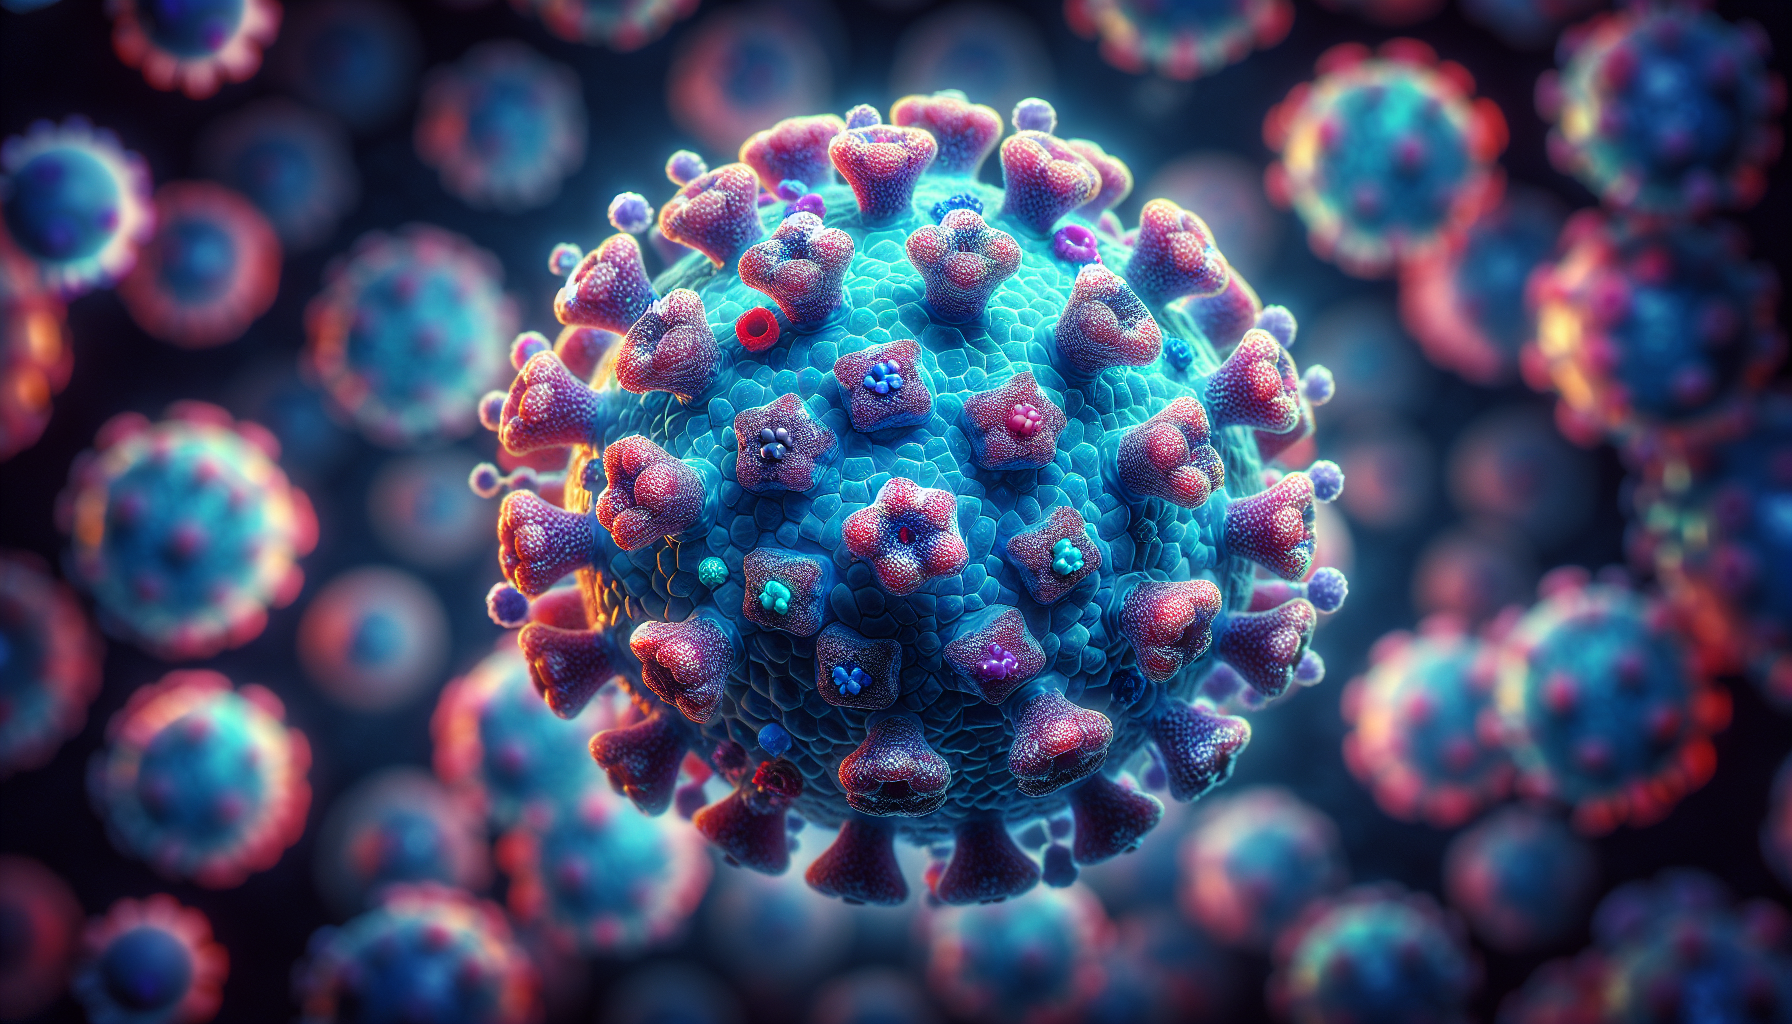 Illustration of herpes virus under a microscope